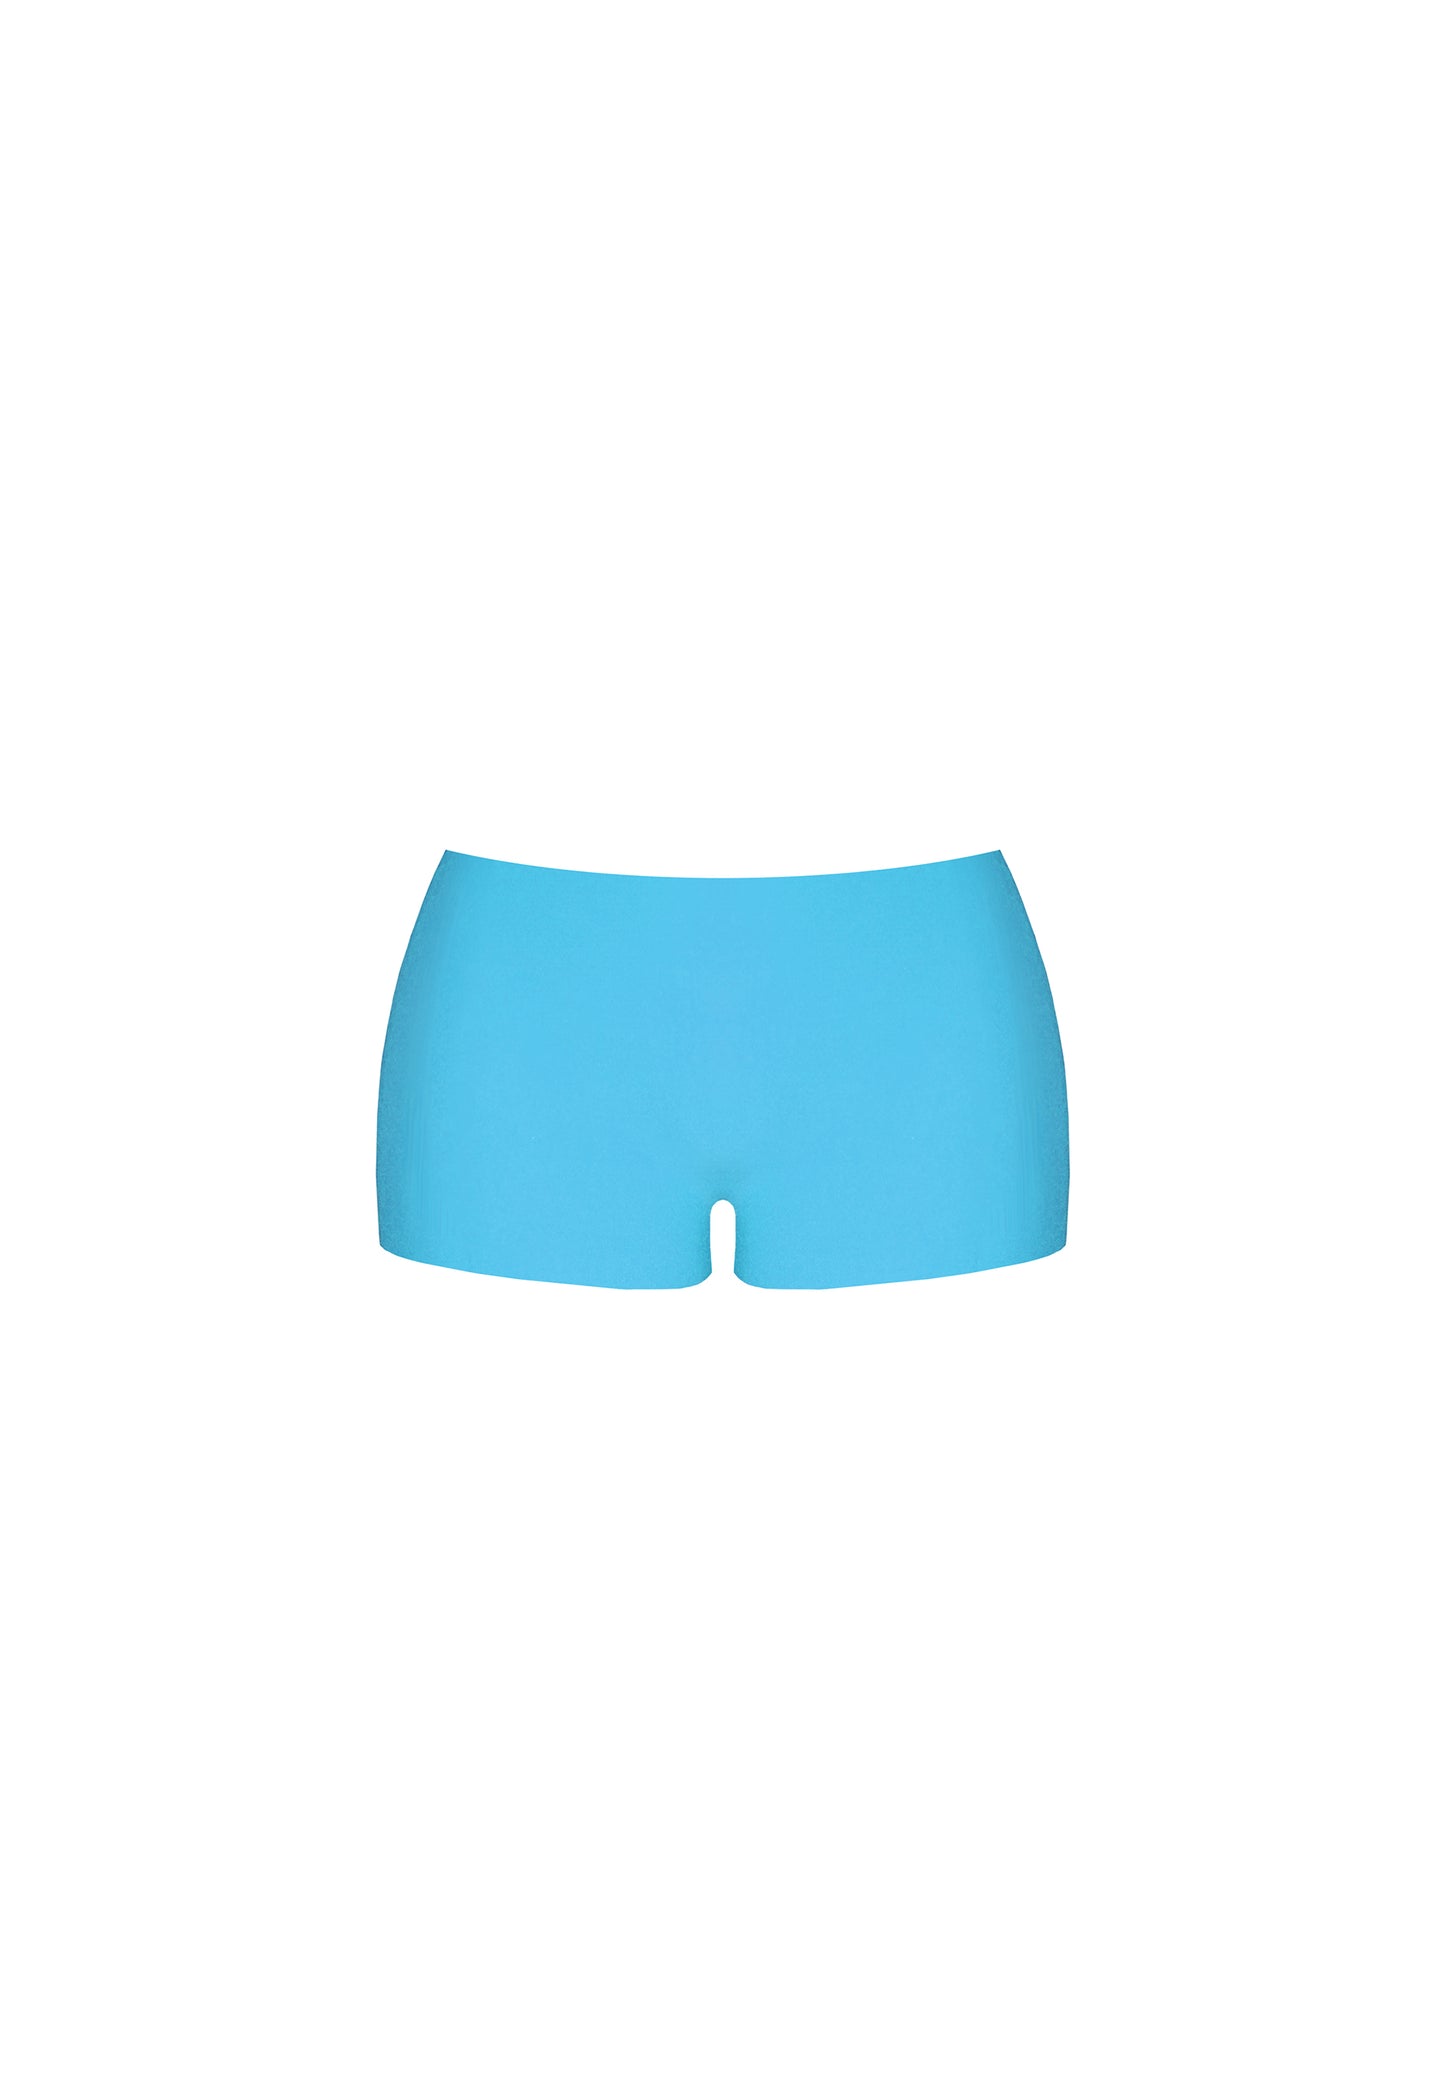 Matching Boy Shorts Blue Lagoon (3 for £12*)